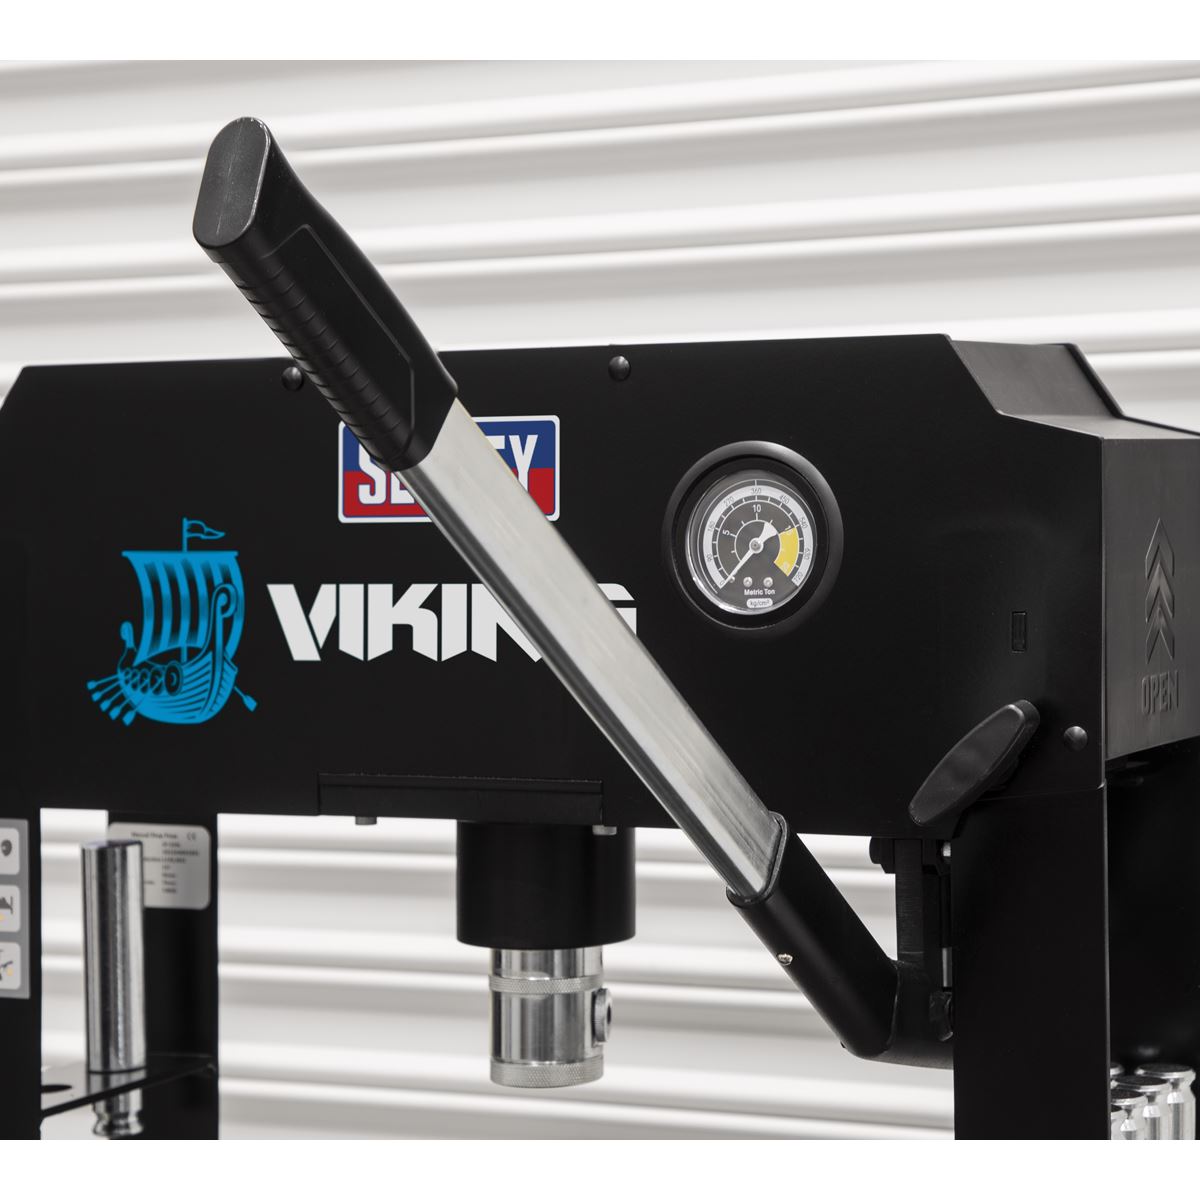 Sealey Viking Hydraulic Press 15tonne Bench Type